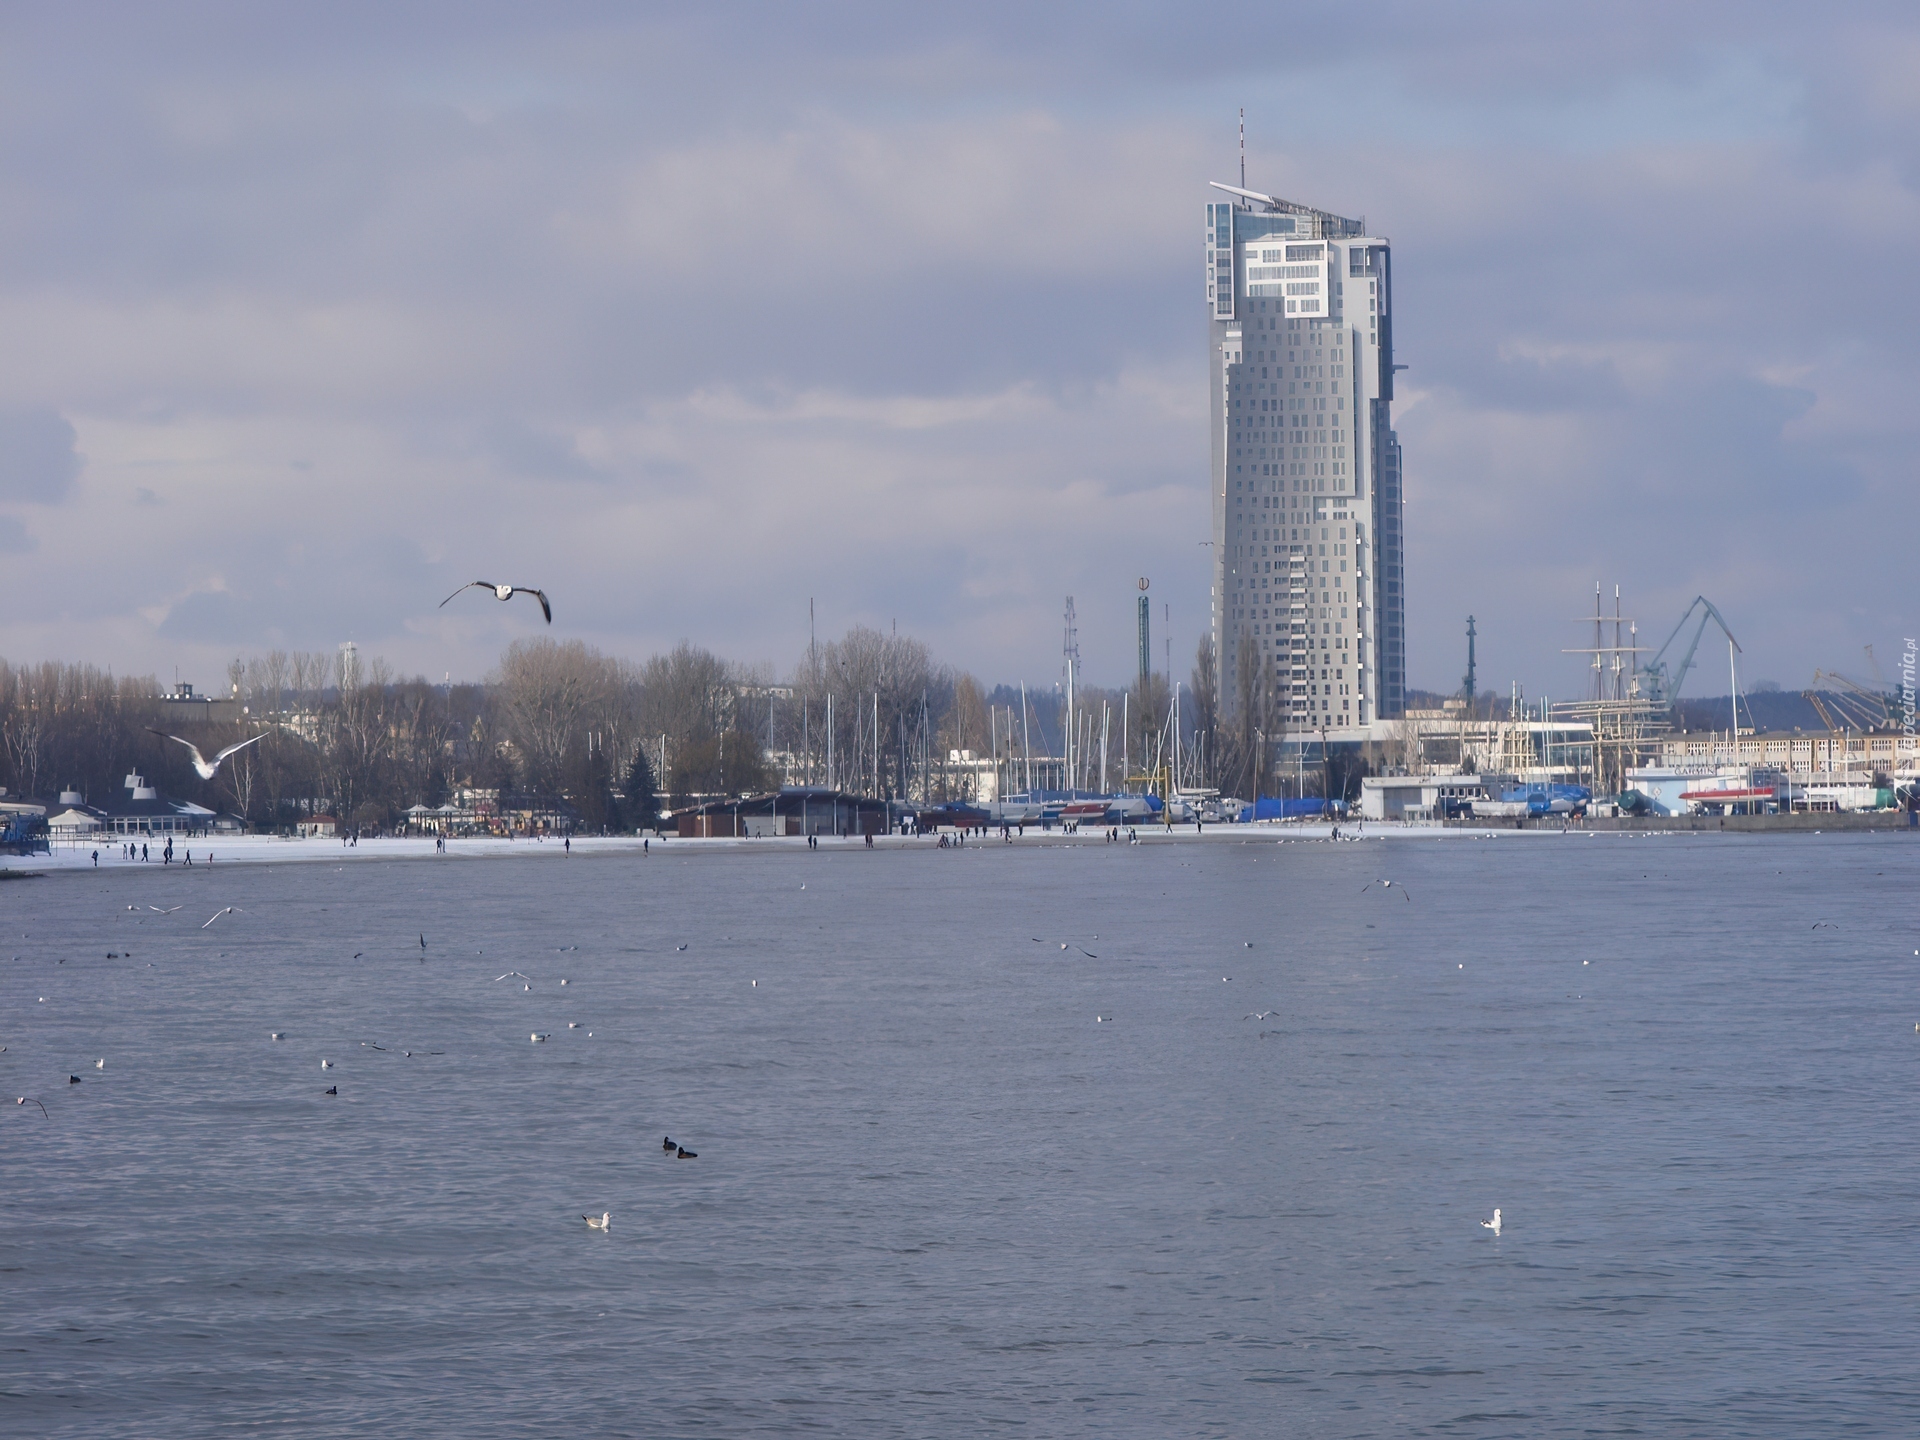 Gdynia, See Tower